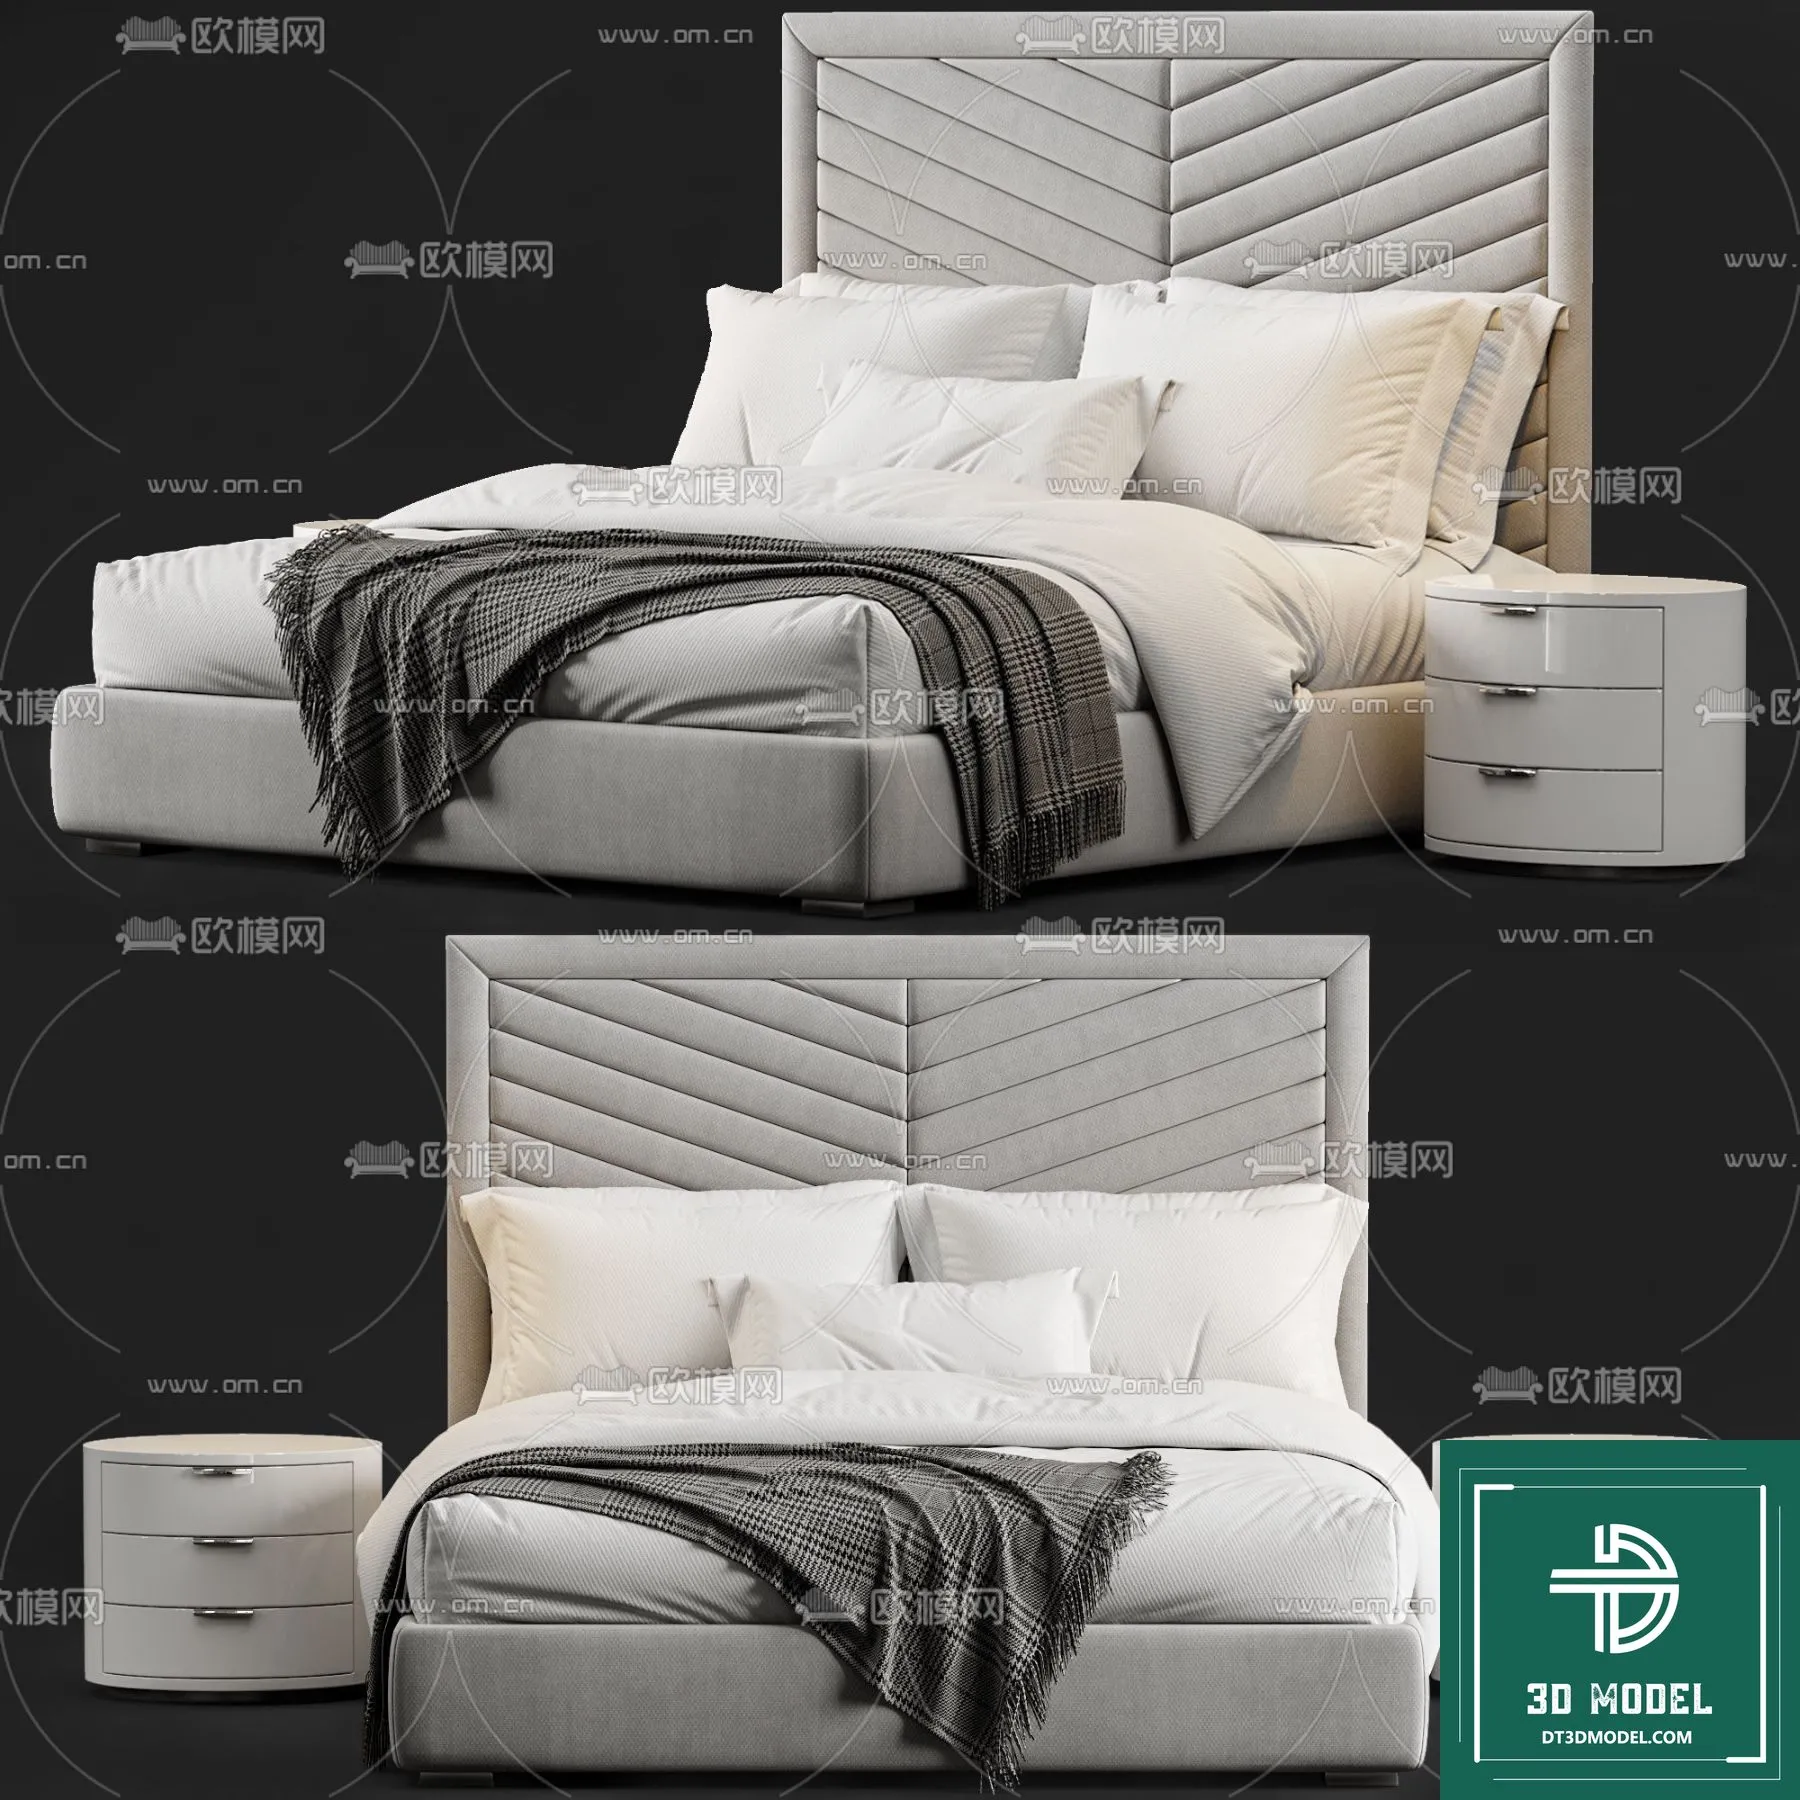 LUXURY – 3D Models – BED – 163